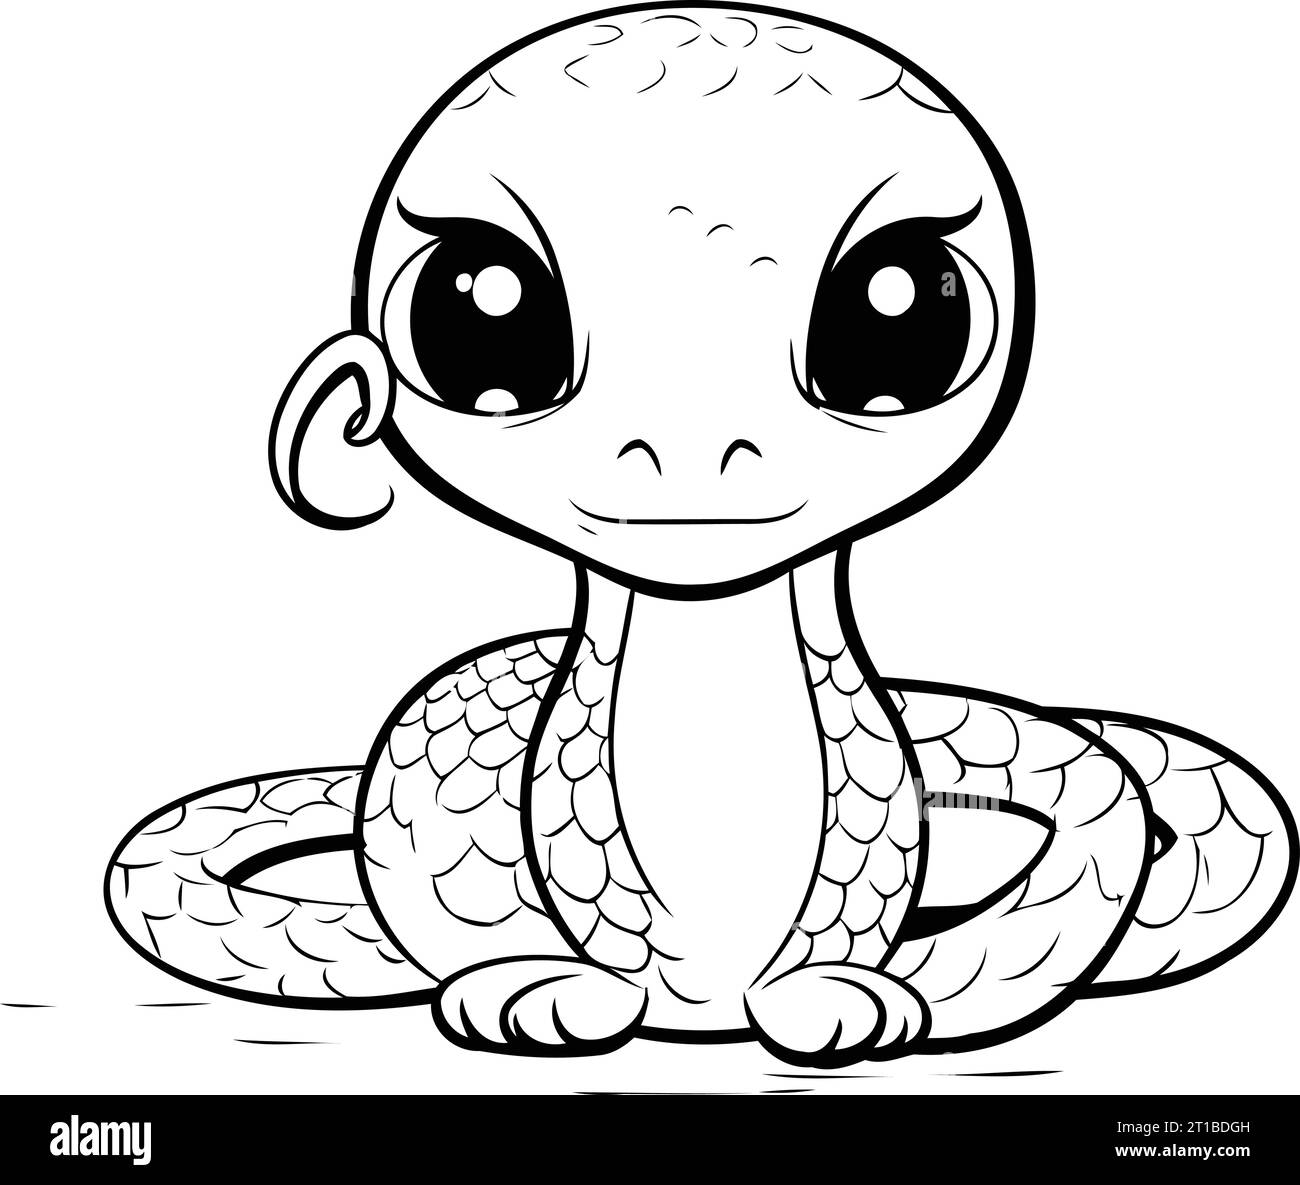 Cute baby snake. Cartoon vector illustration. Coloring book for children. Stock Vector